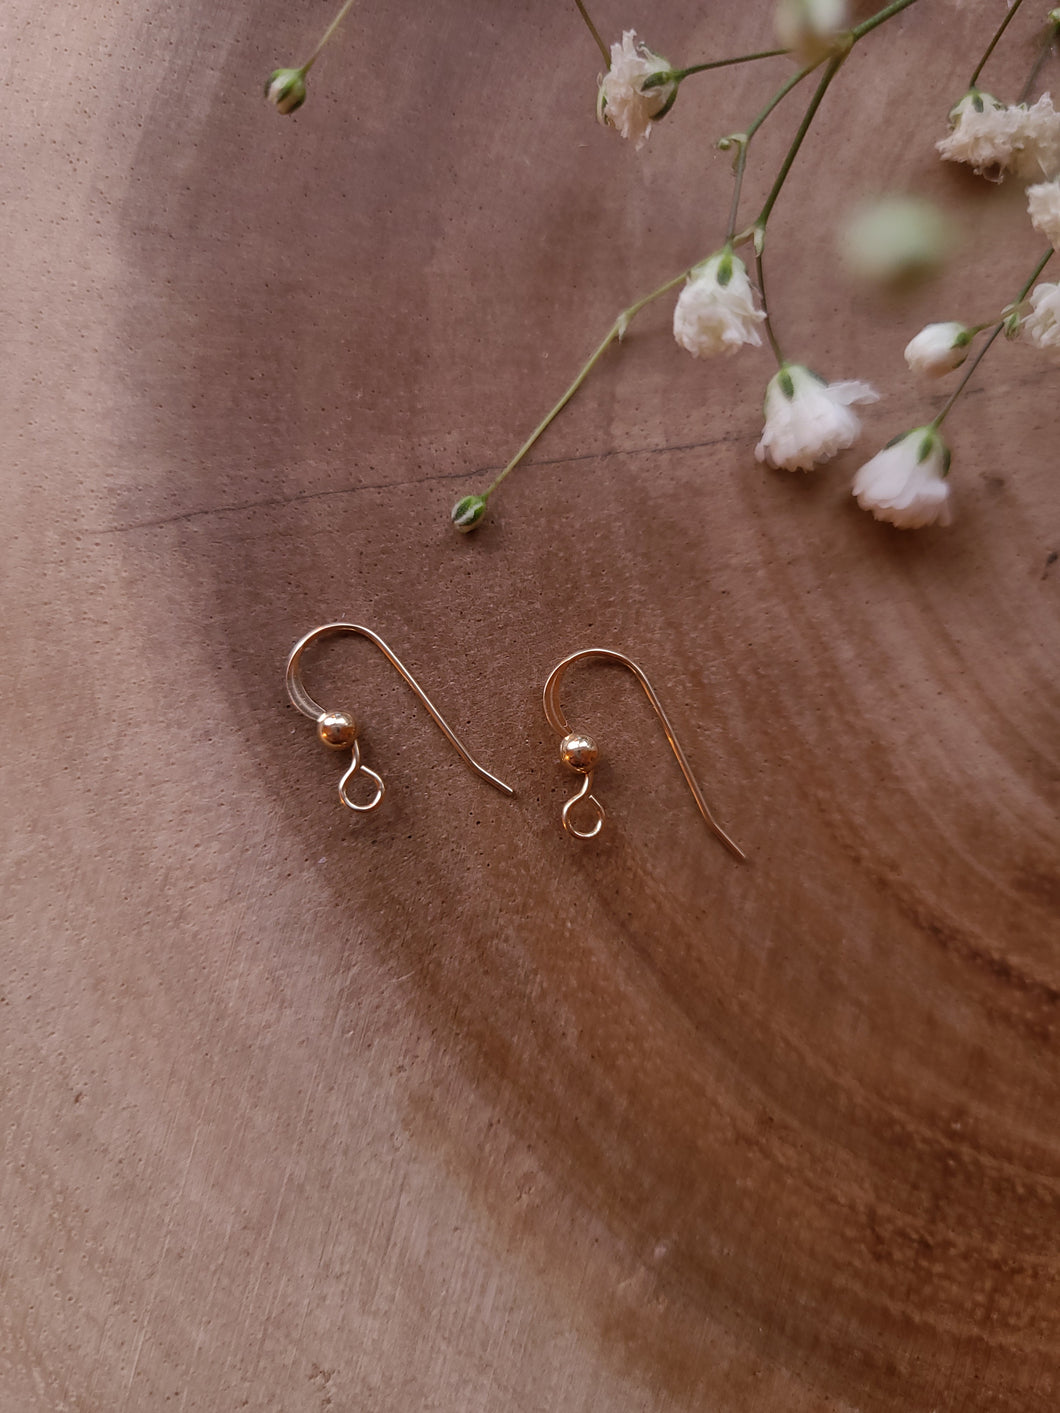 14k Gold Filled Earwire add-on, 1 pair of gold filled ear hooks, earrings add-ons